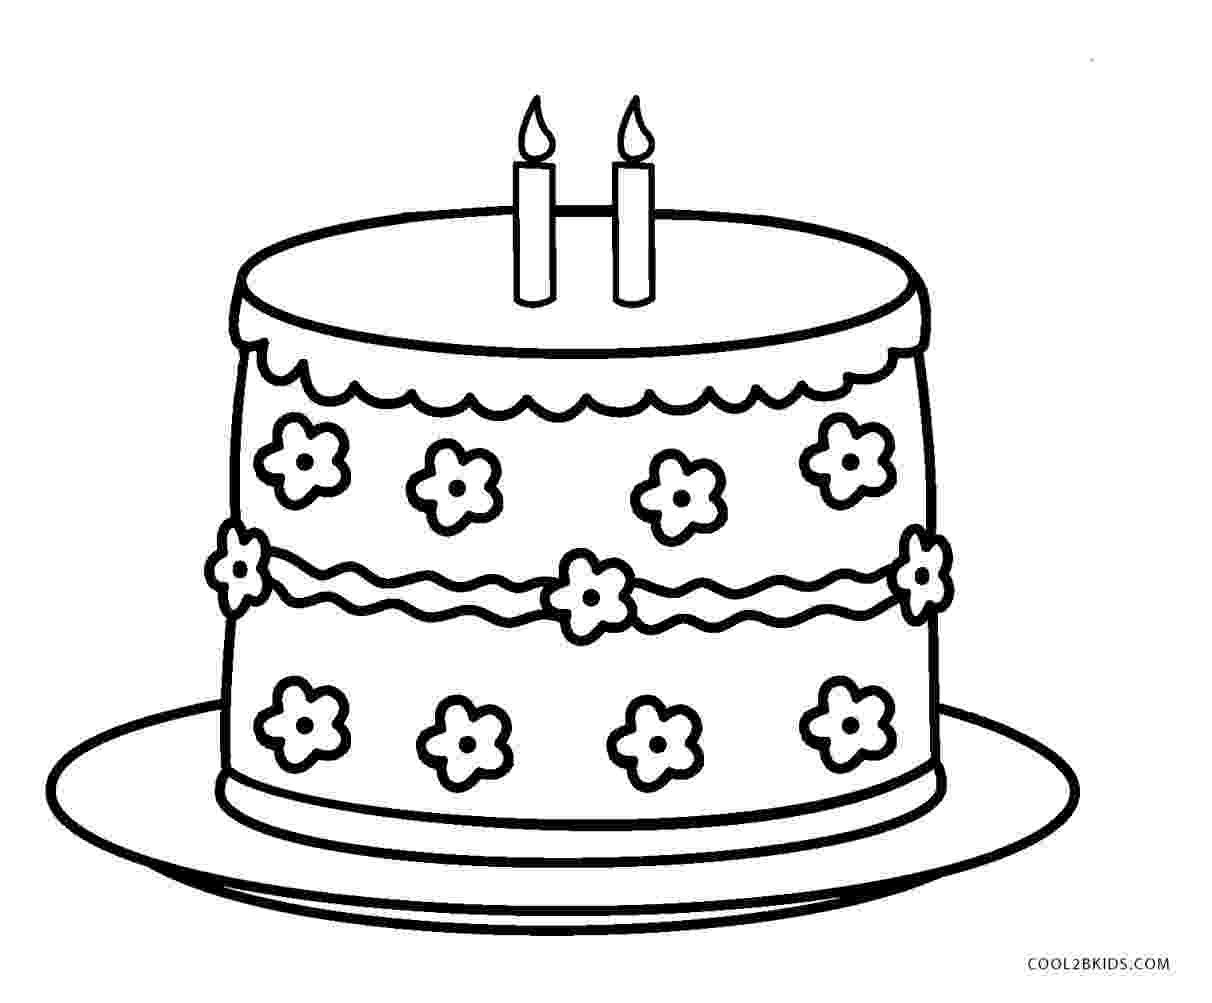 printable birthday cake images free printable birthday cake coloring pages for kids cake printable images birthday 